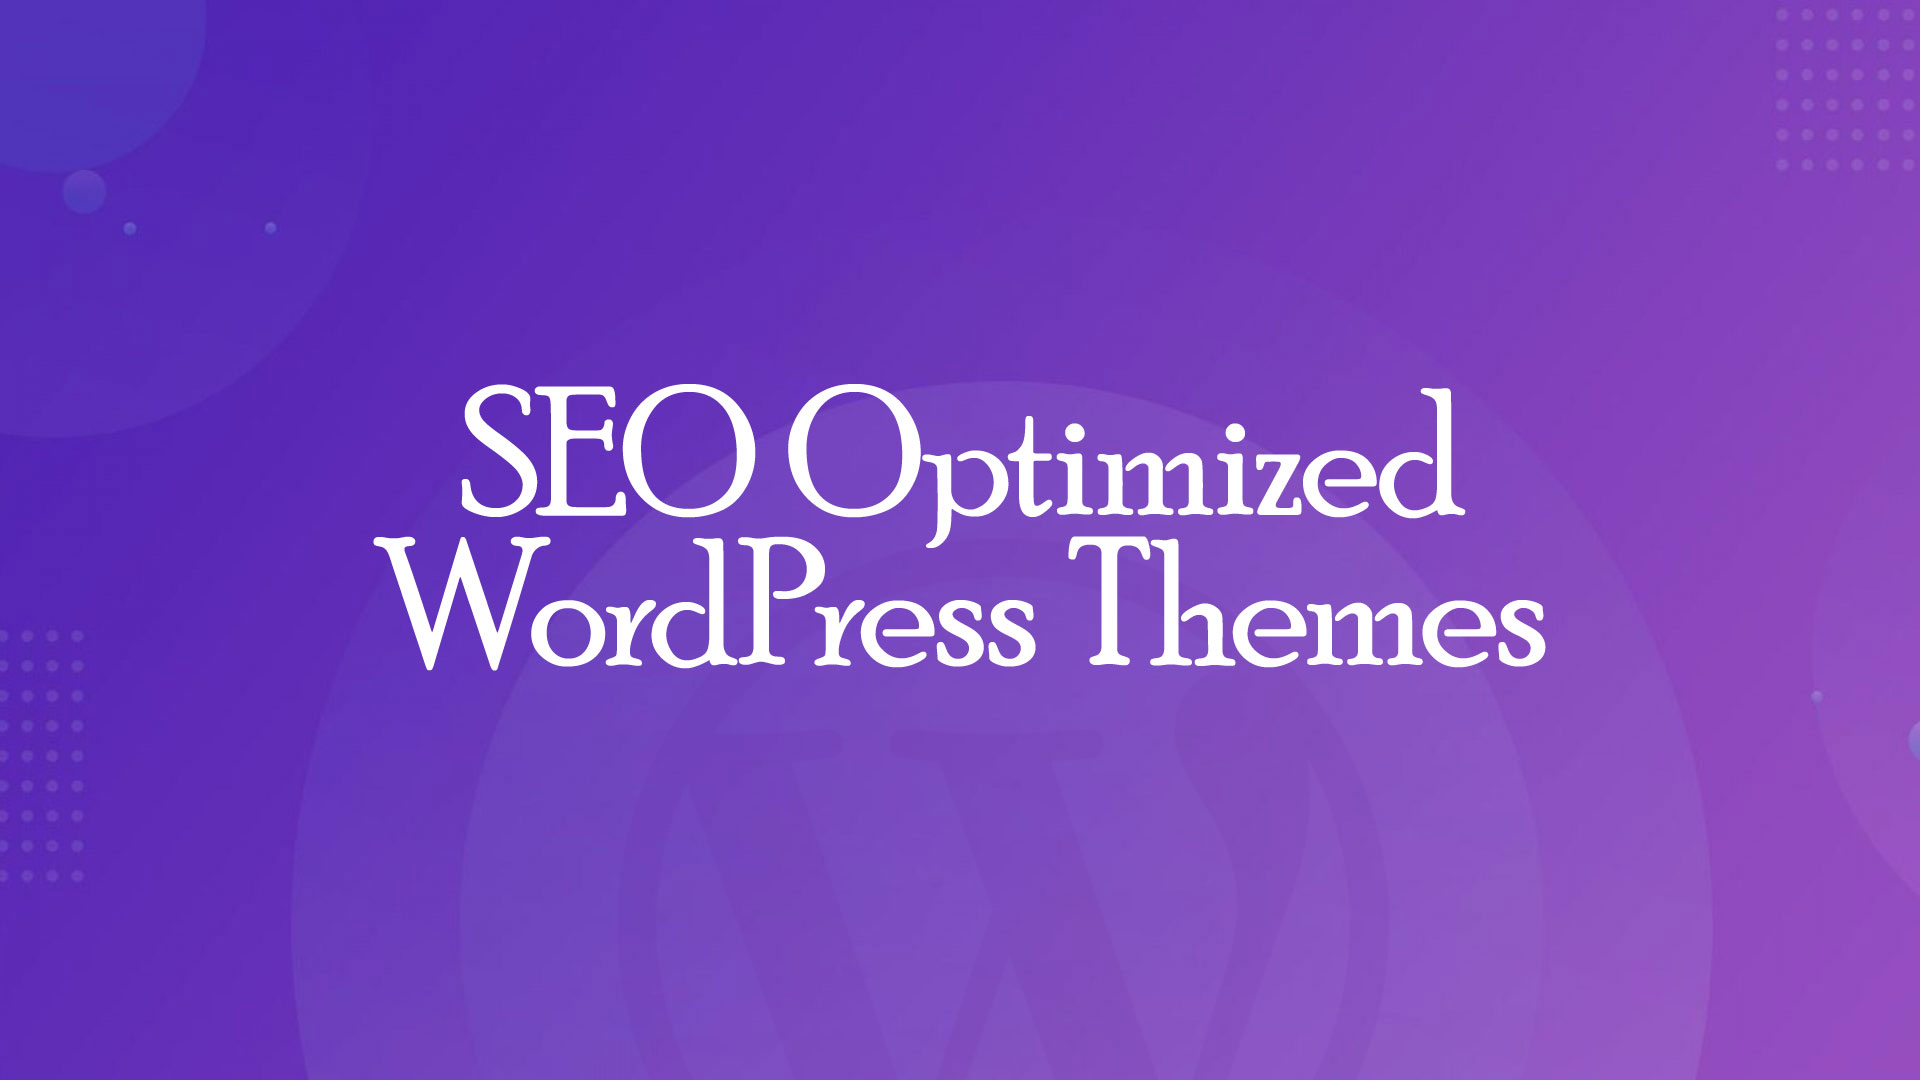 SEO Optimized WordPress Themes